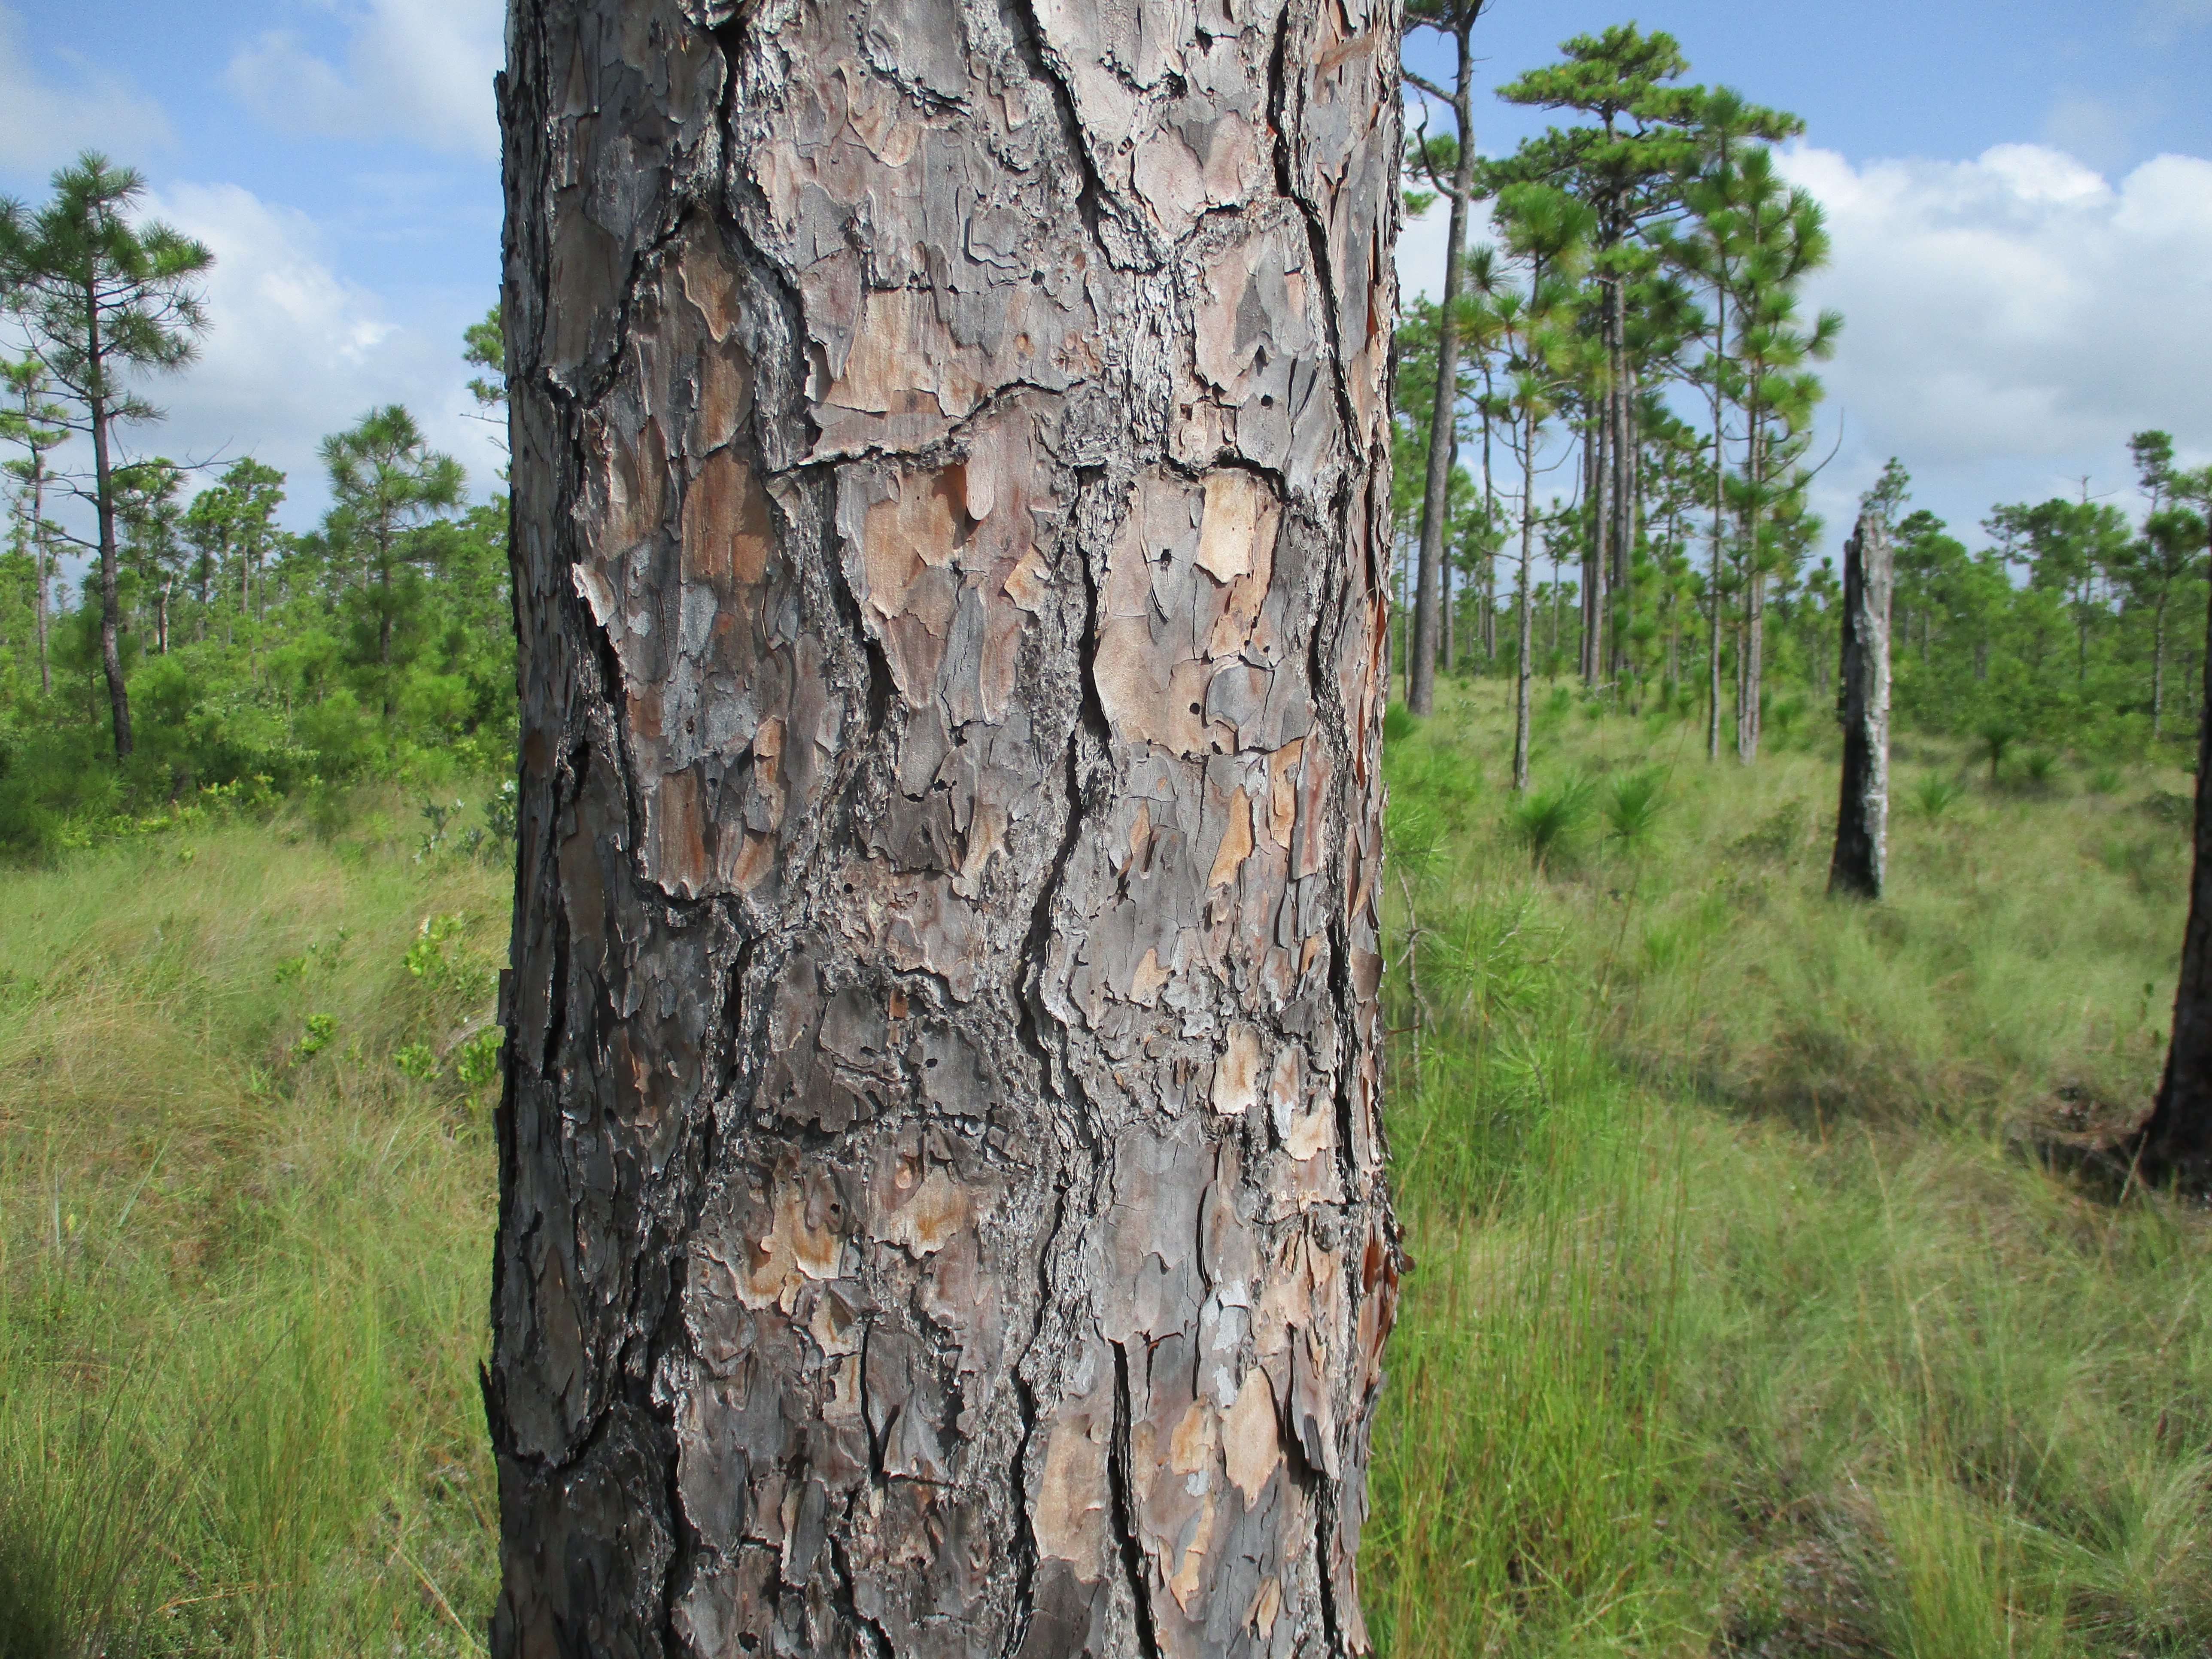 A very mature longleaf pine